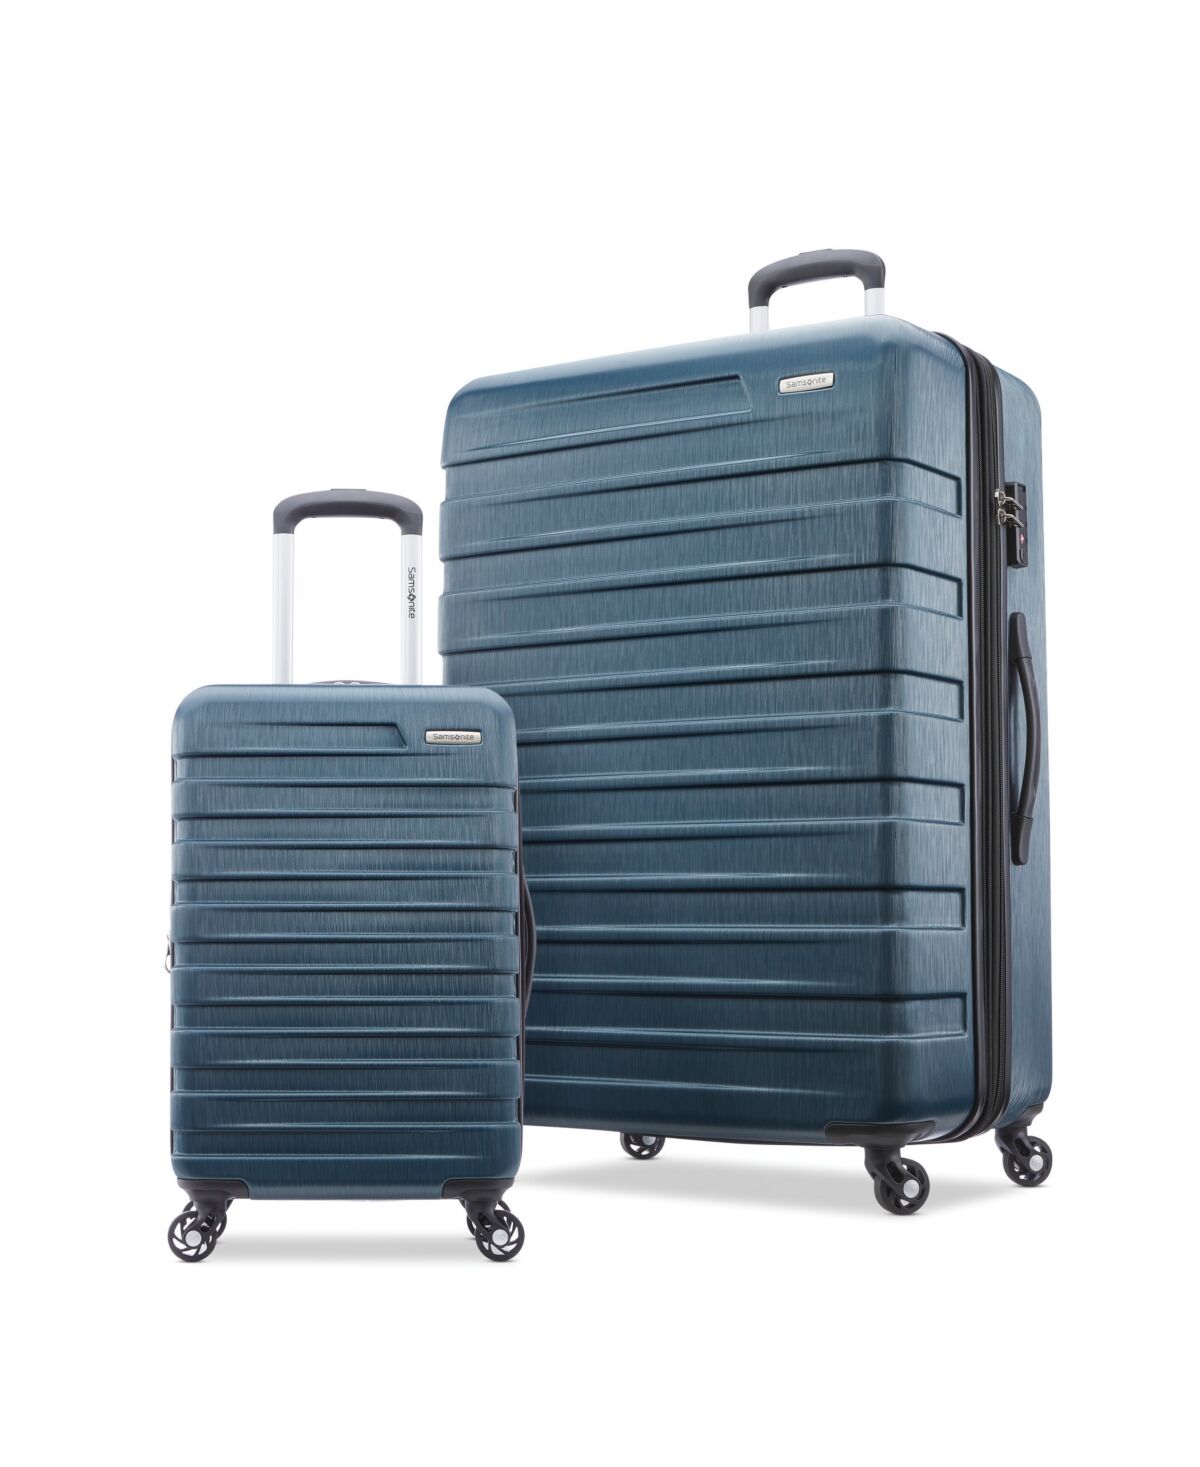 Samsonite Uptempo 2-Pc. Hardside Luggage Set, Created for Macy's - Metallic Teal